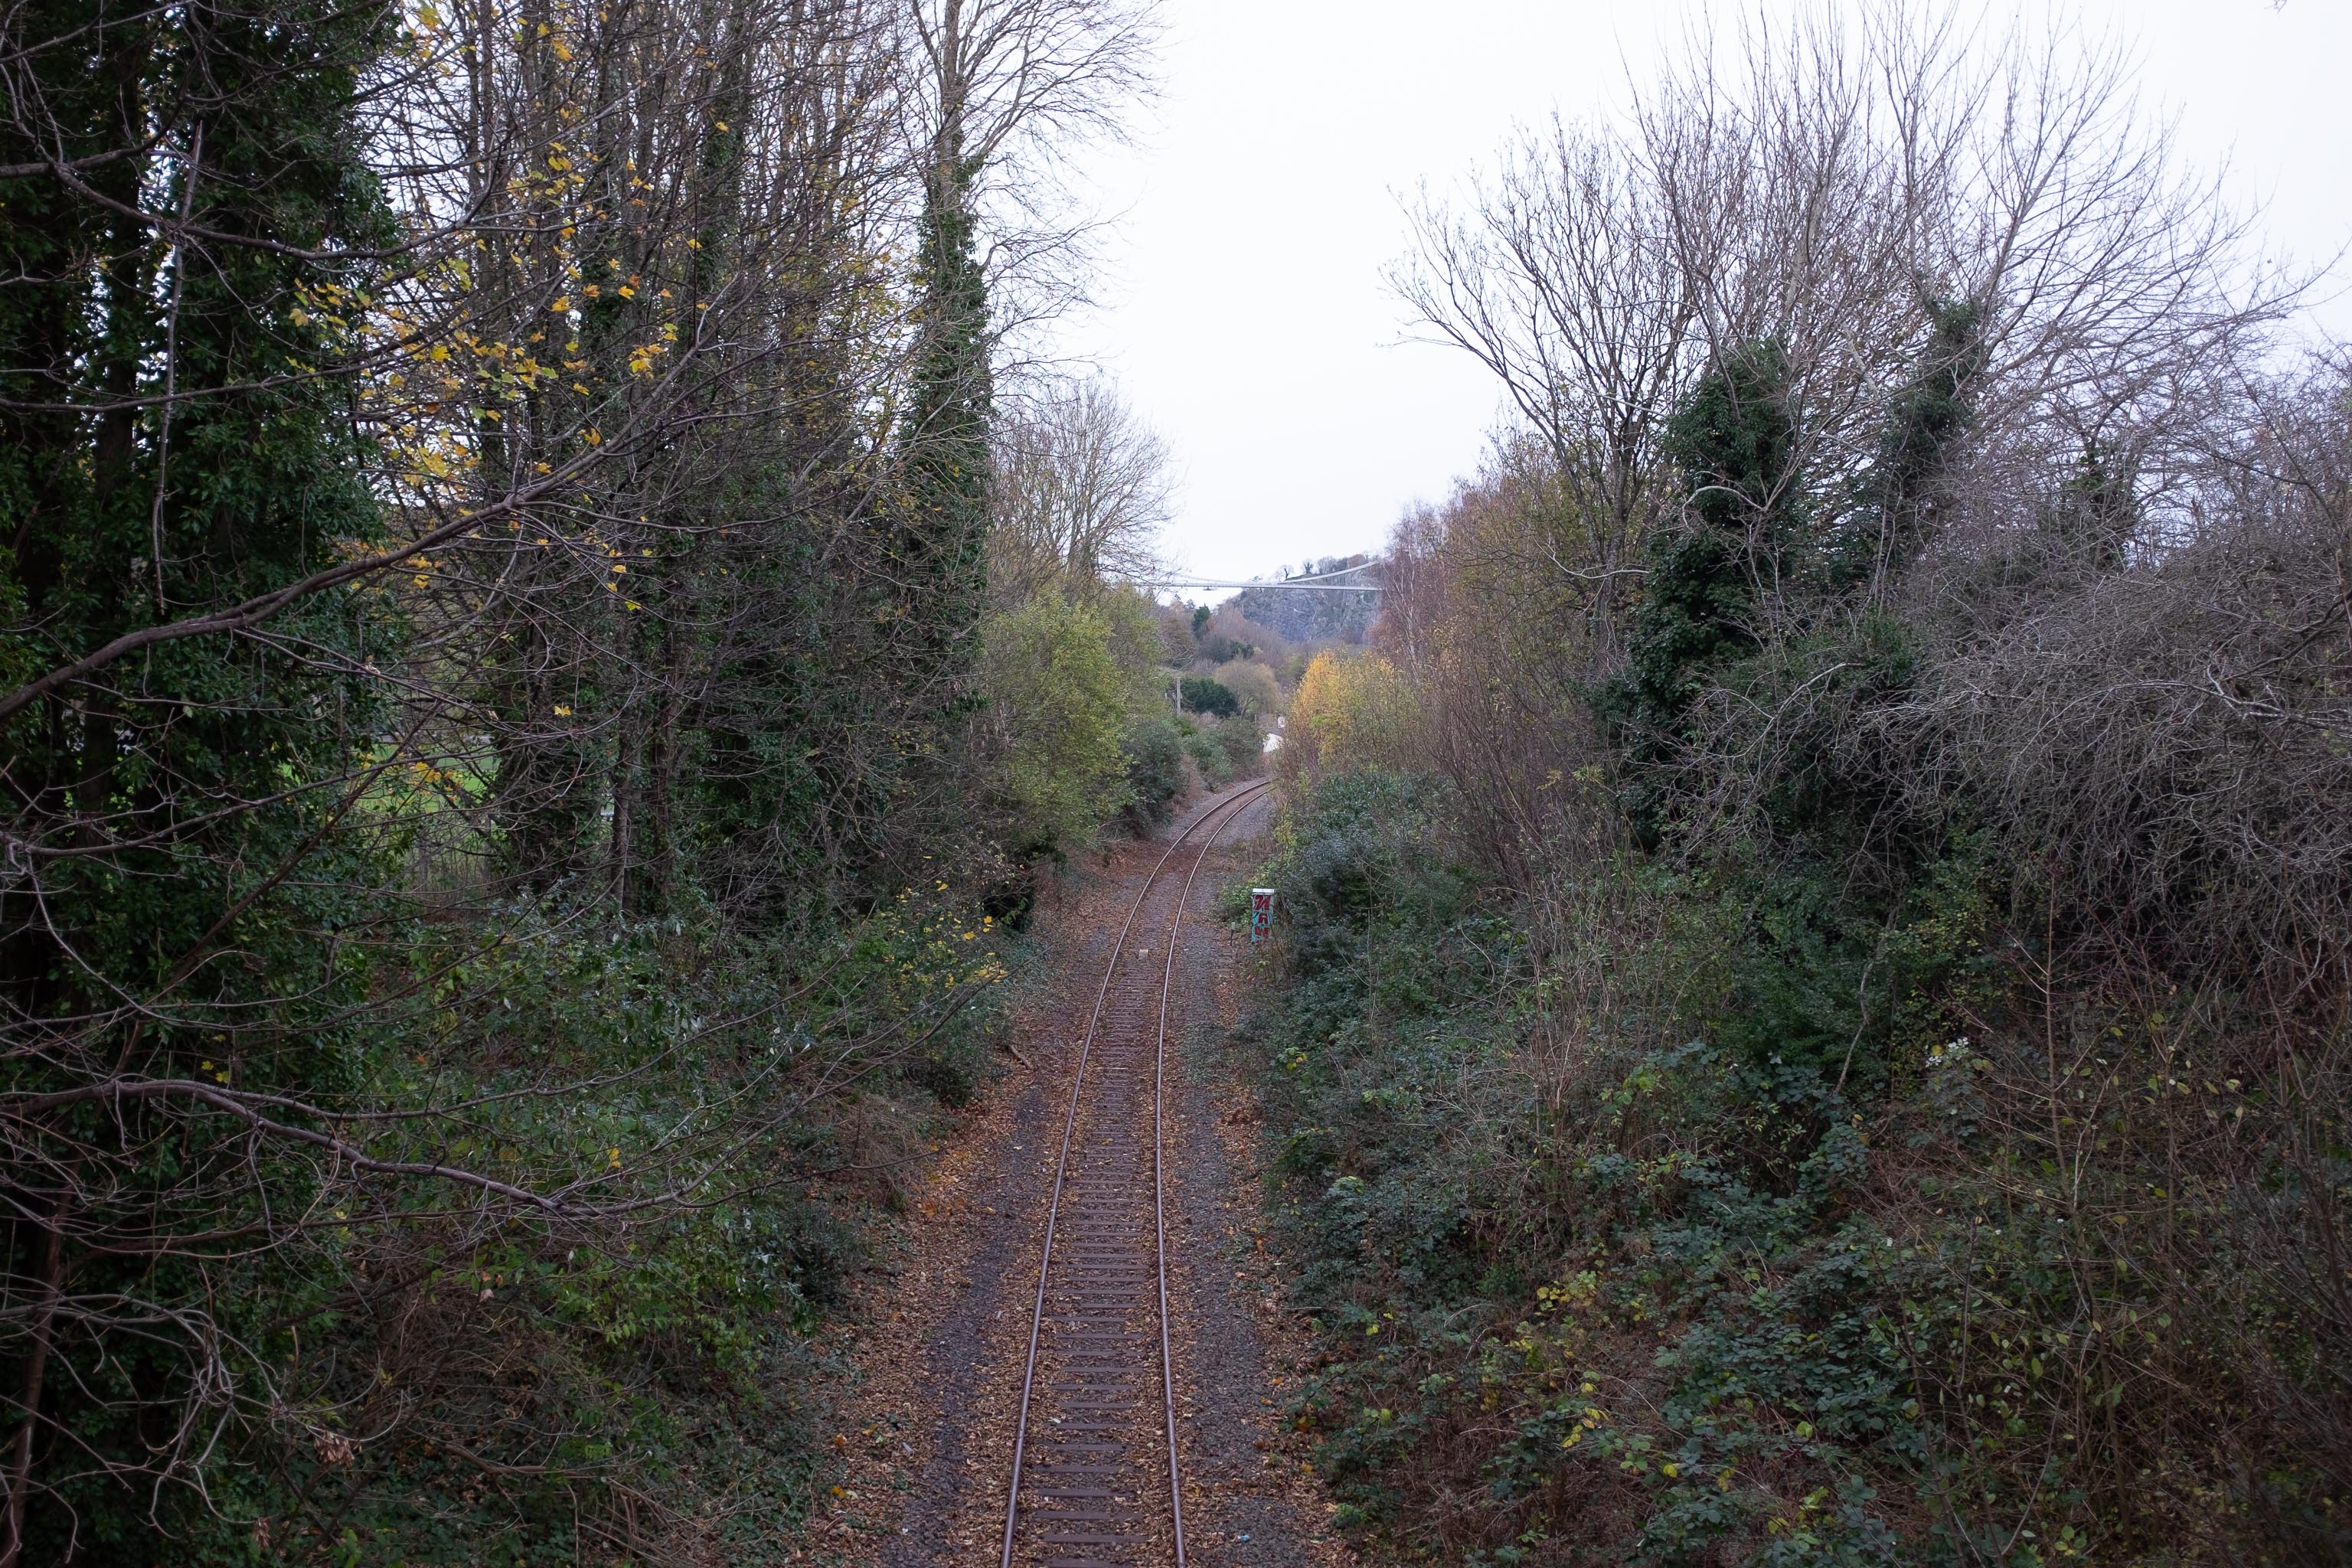 The Old Portishead Railway
